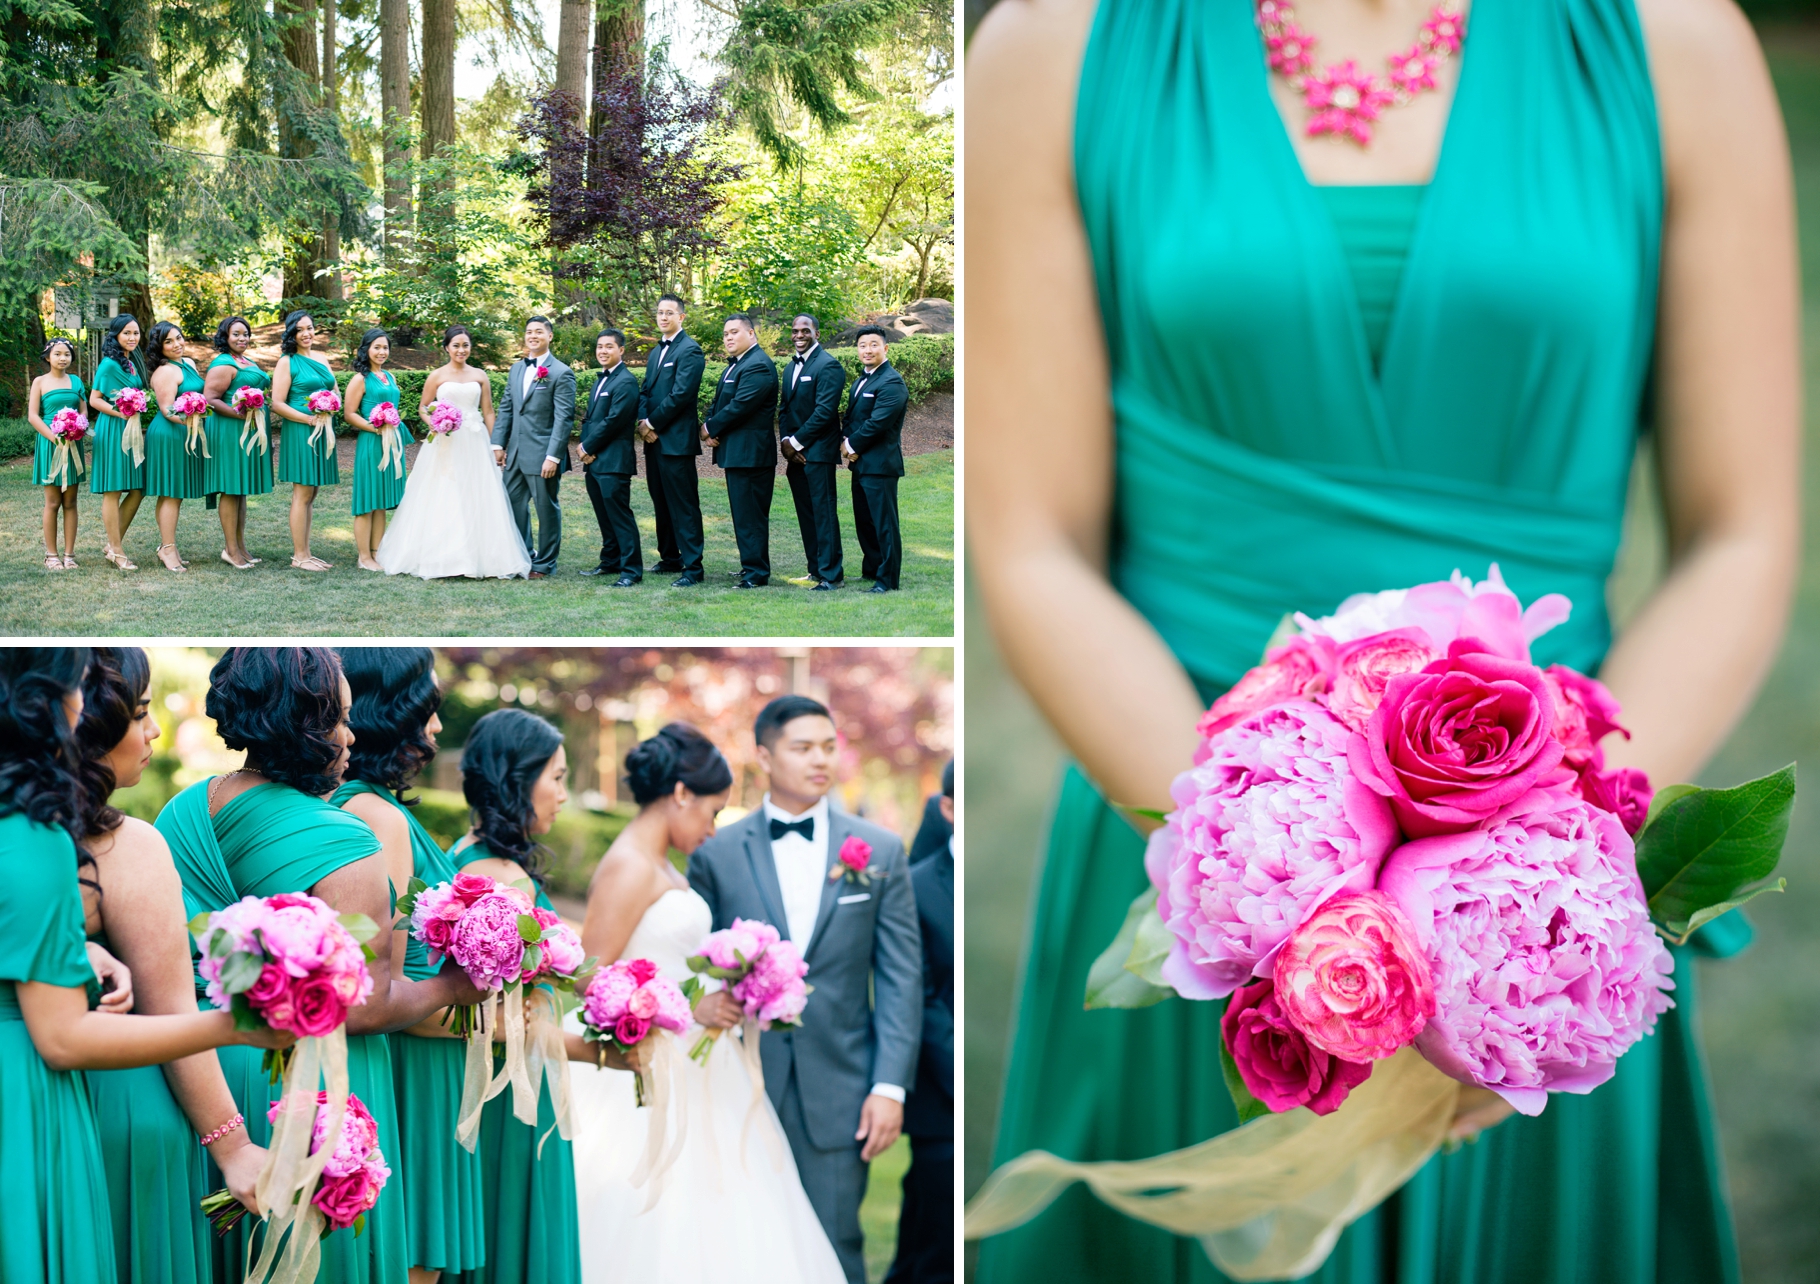 21-Wedding-Party-Groomsmen-Bridesmaids-Wedding-Day-Portraits-Photographer-Peony-Bouquet-Rock-Creek-Gardens-Seattle-Photography-by-Betty-Elaine